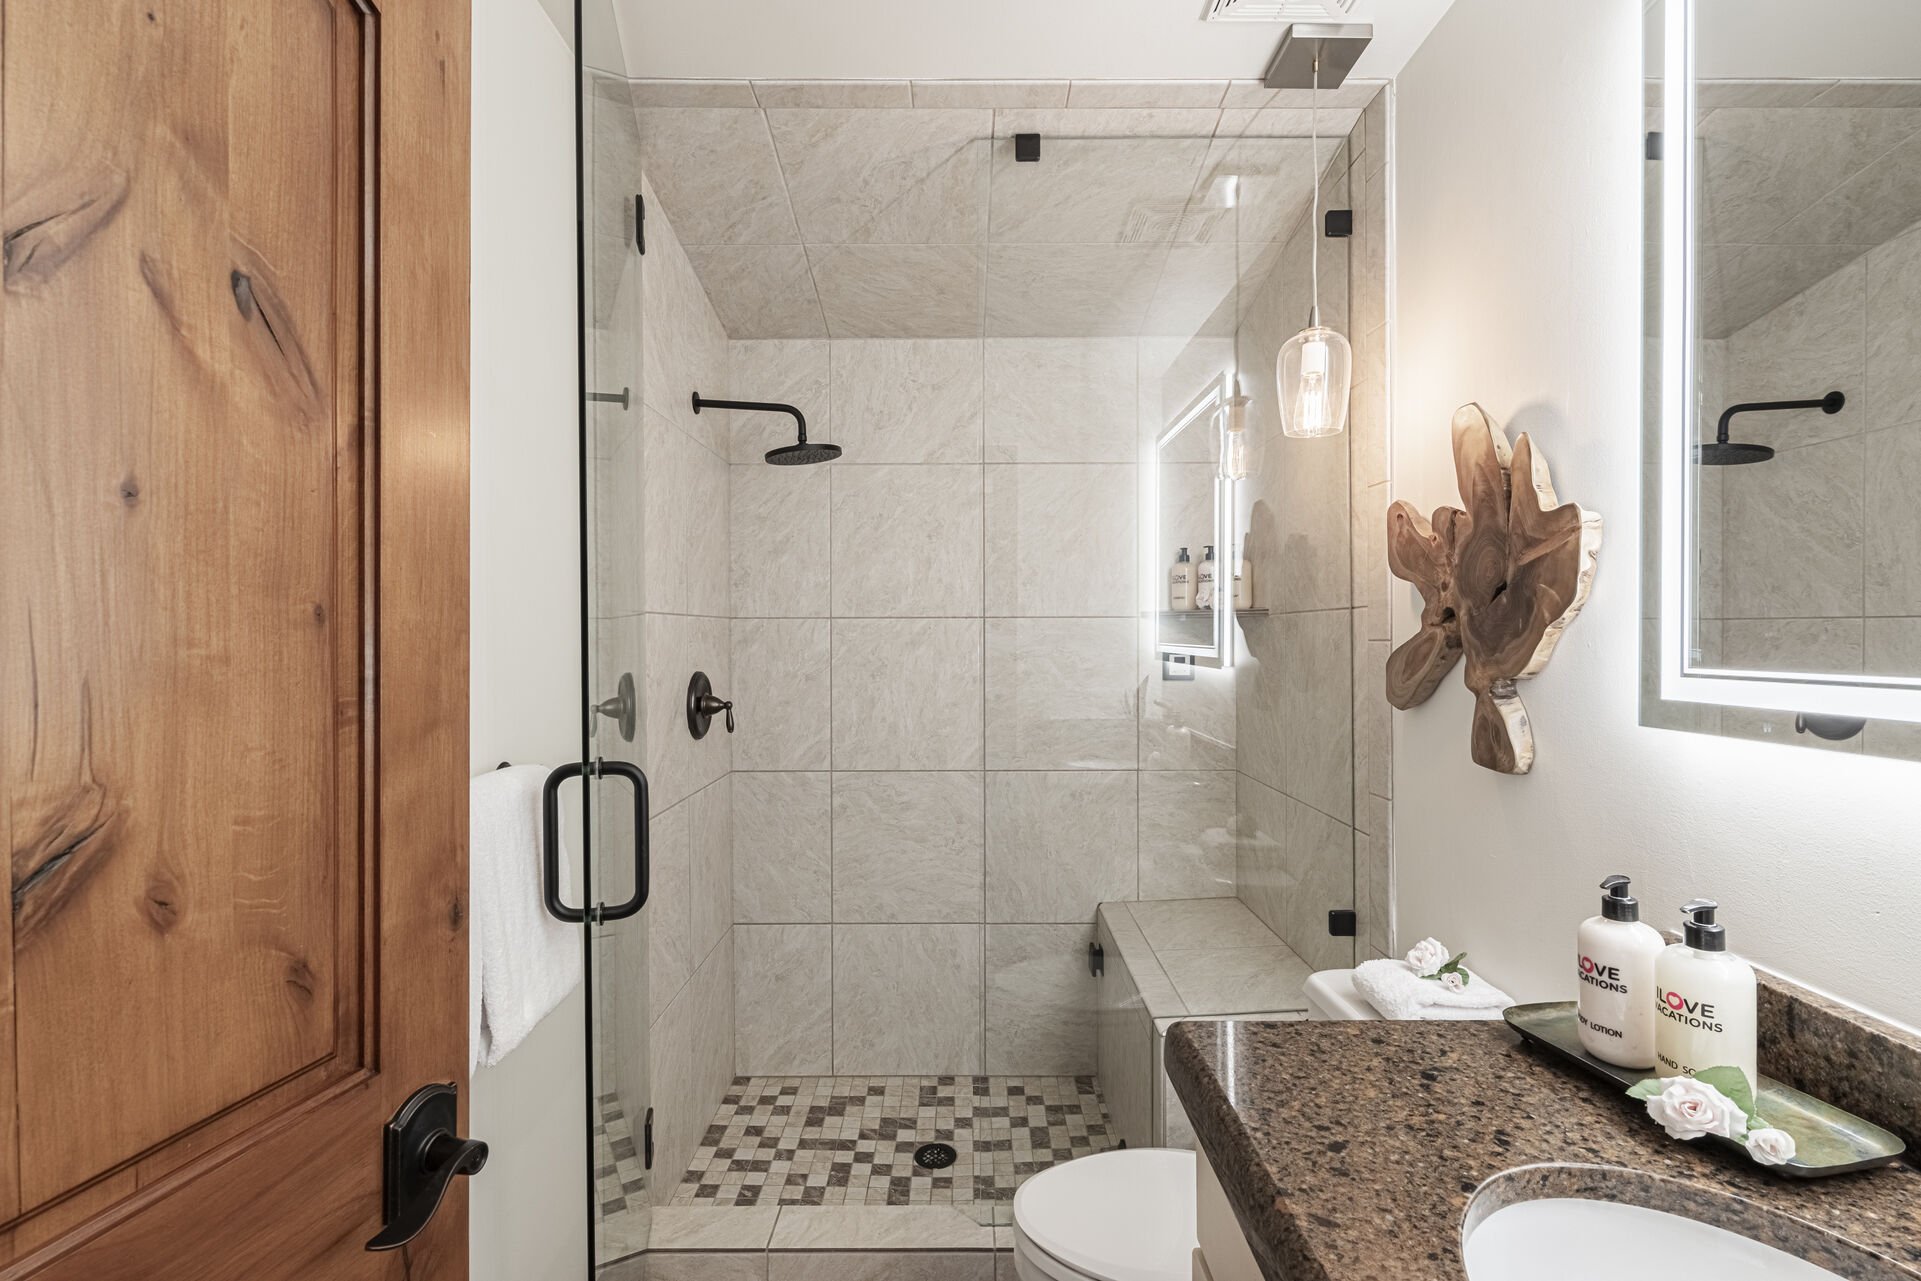 Main Level - Full Shared Bathroom with Tiled Shower